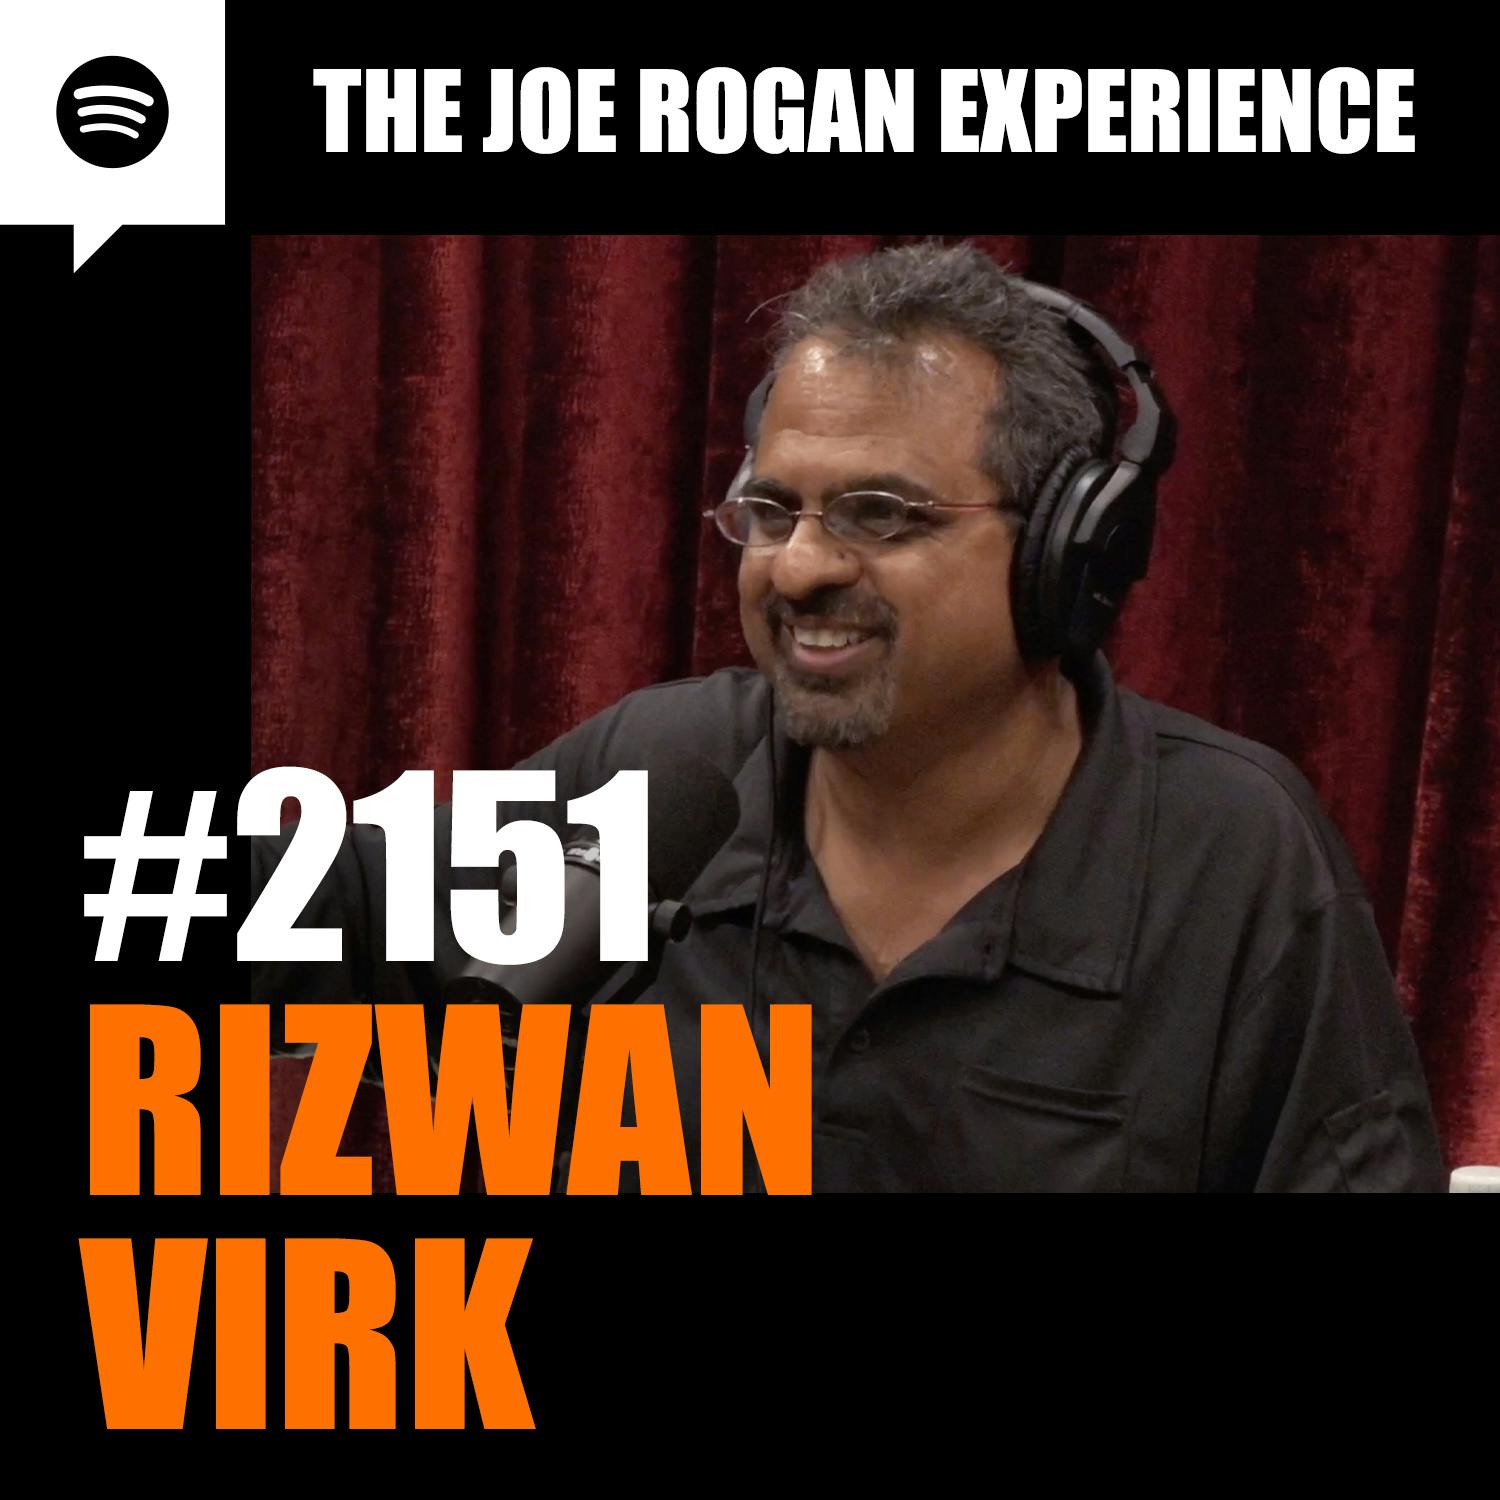 #2151 - Rizwan Virk